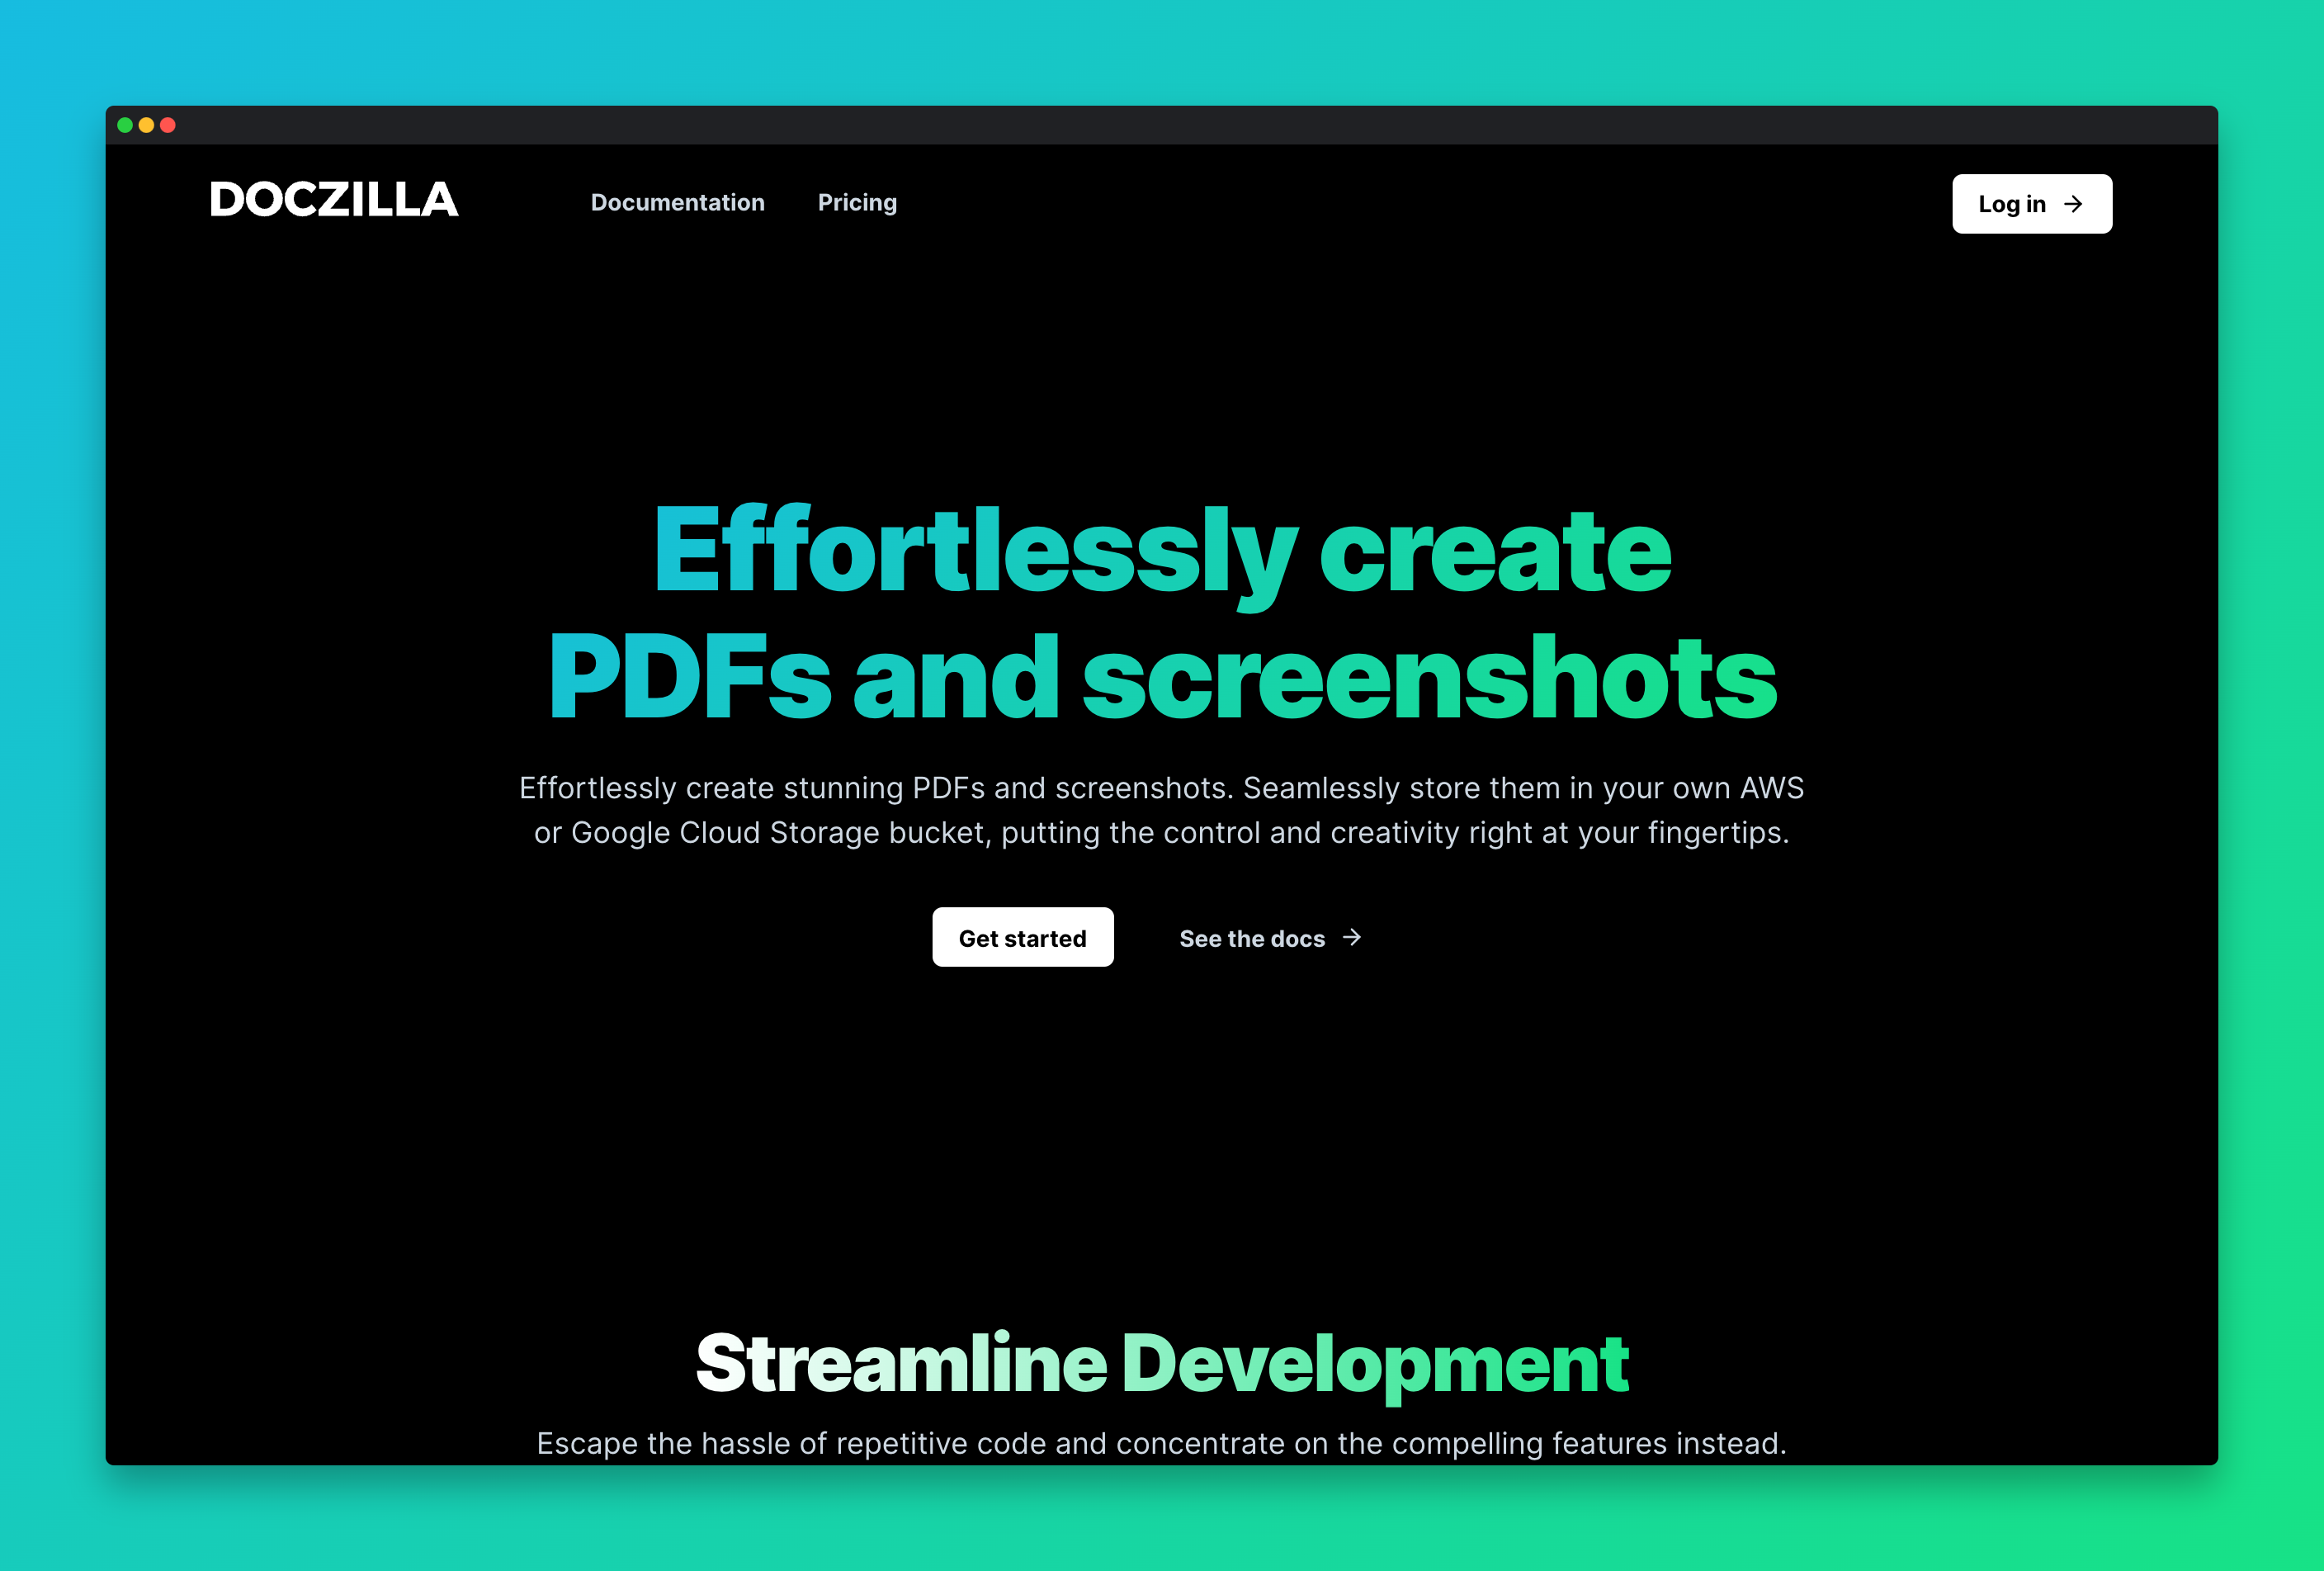 Doczilla Product screenshots